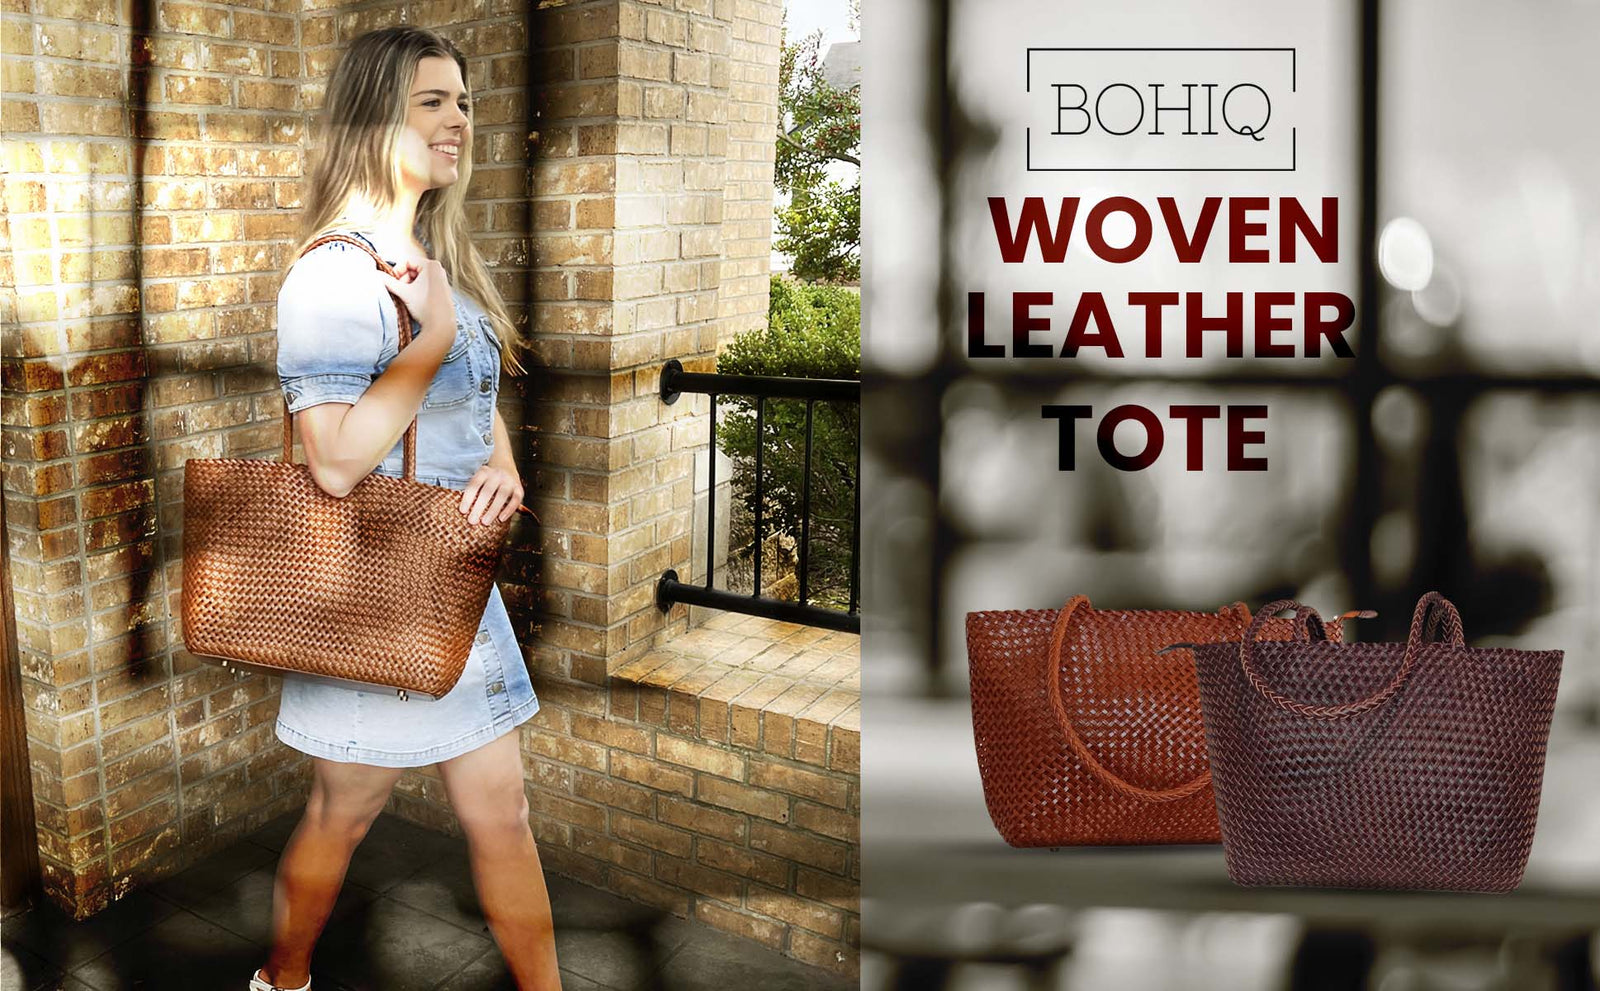 Bohiq Woven Leather Tote, leather purse, leather handbags